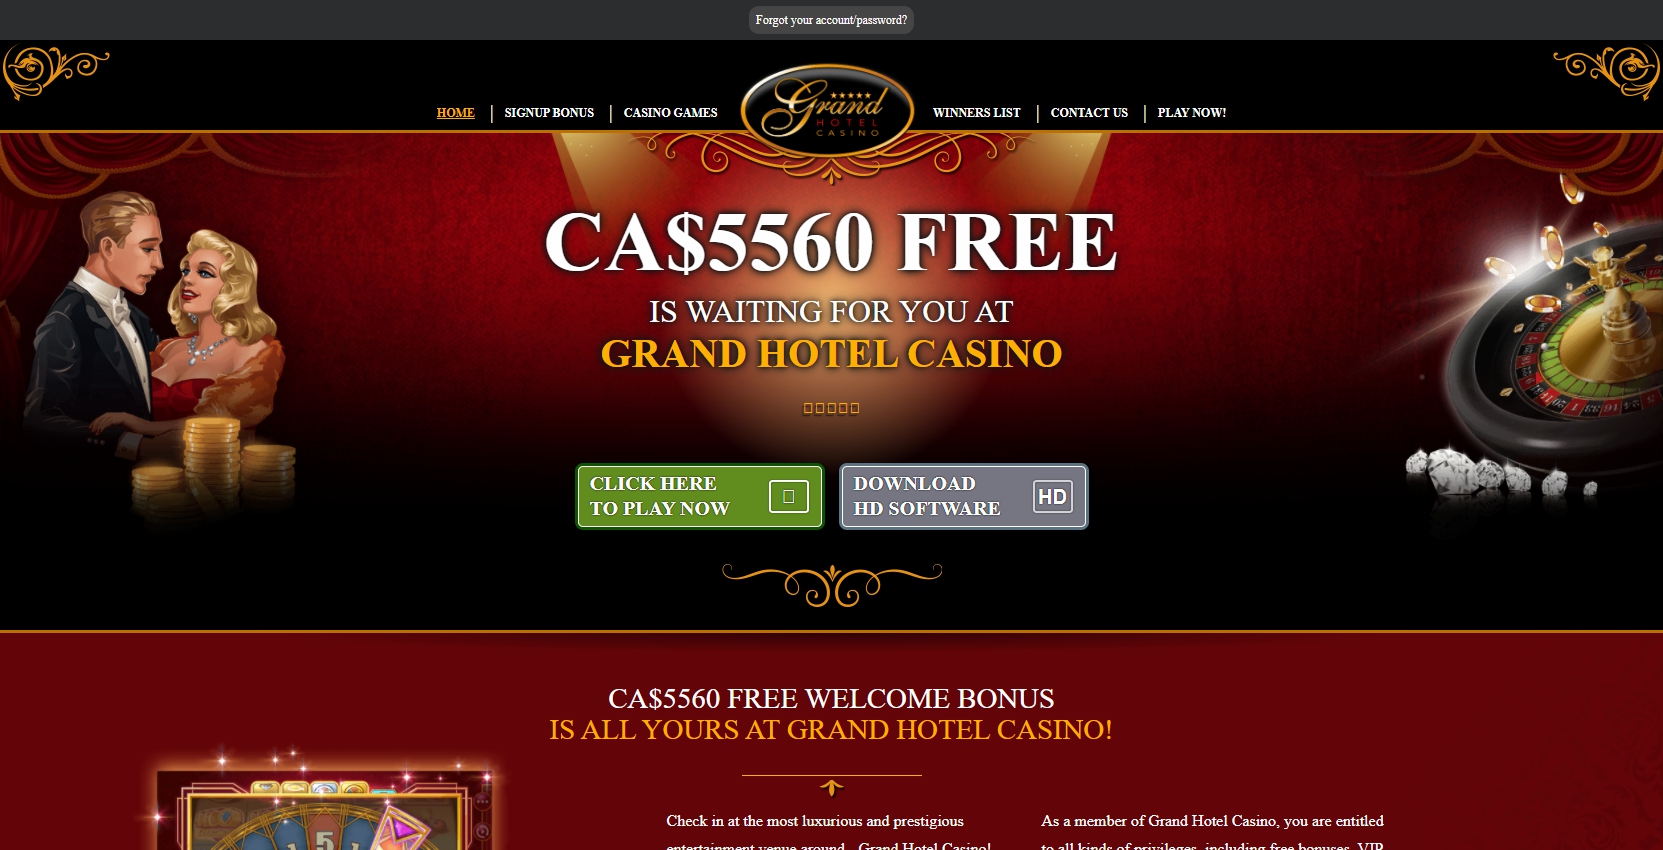 Grand Hotel Casino Review